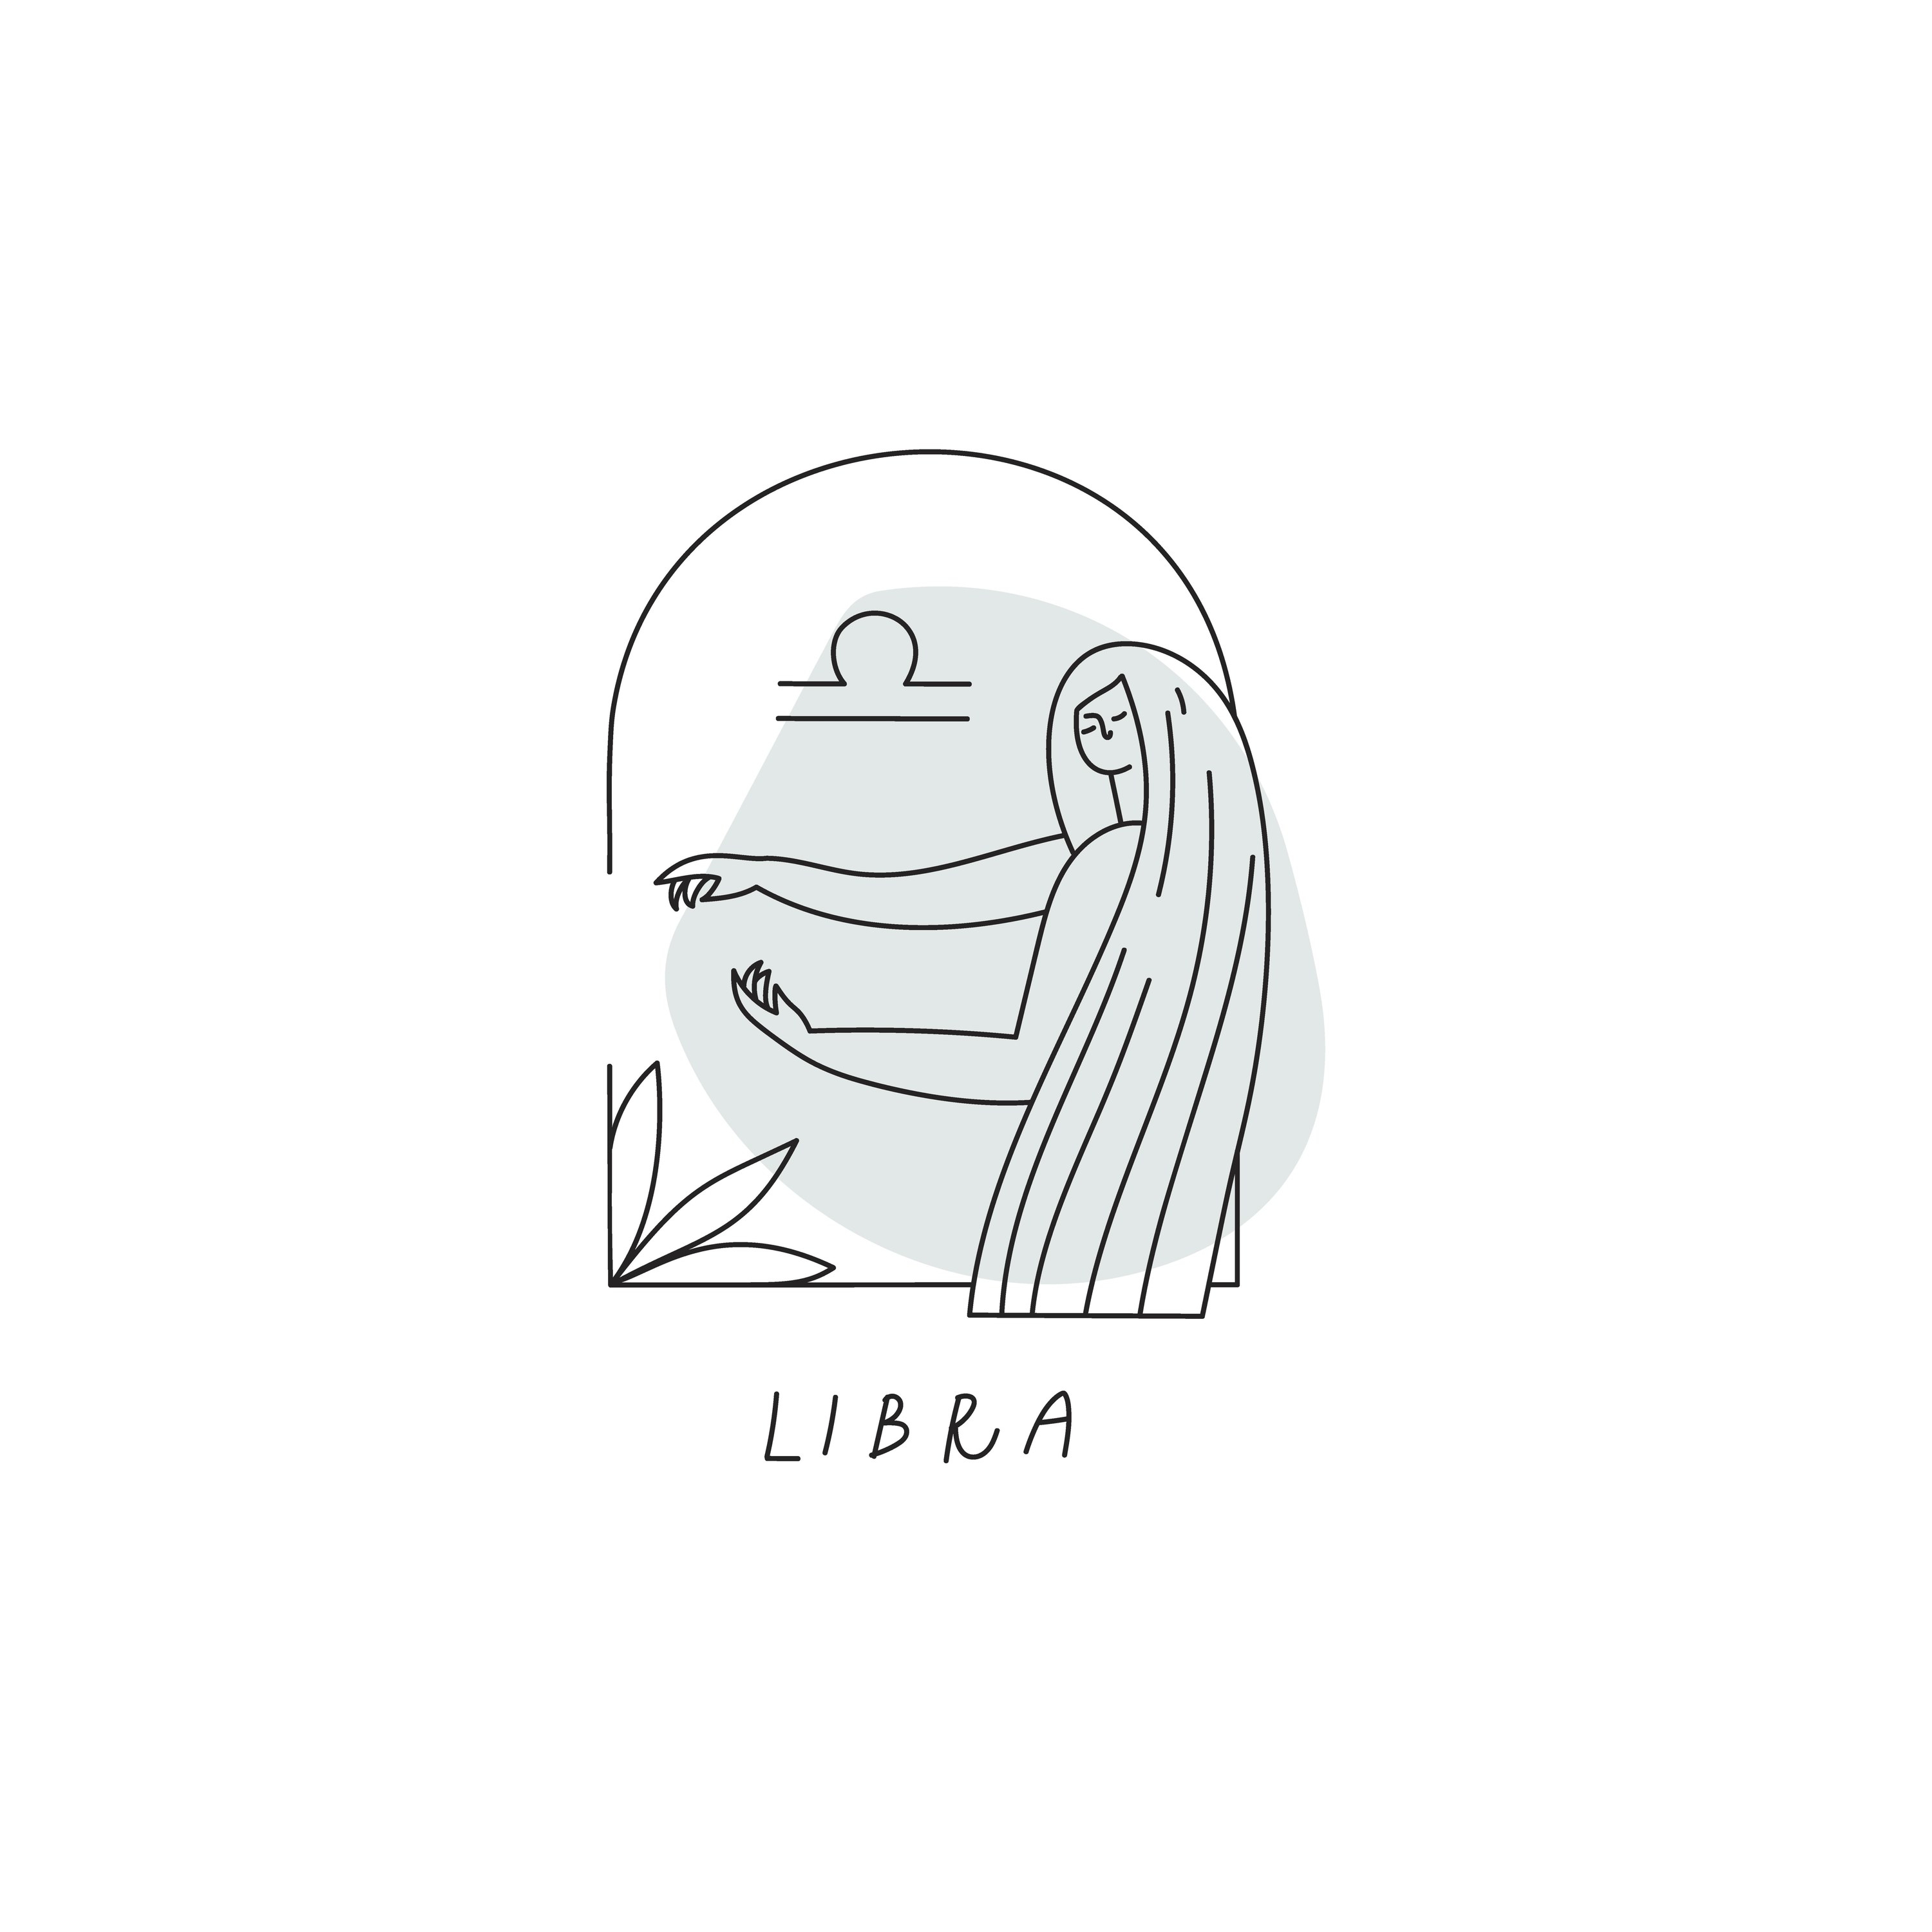 Libra zodiac sign illustration with blue watercolor